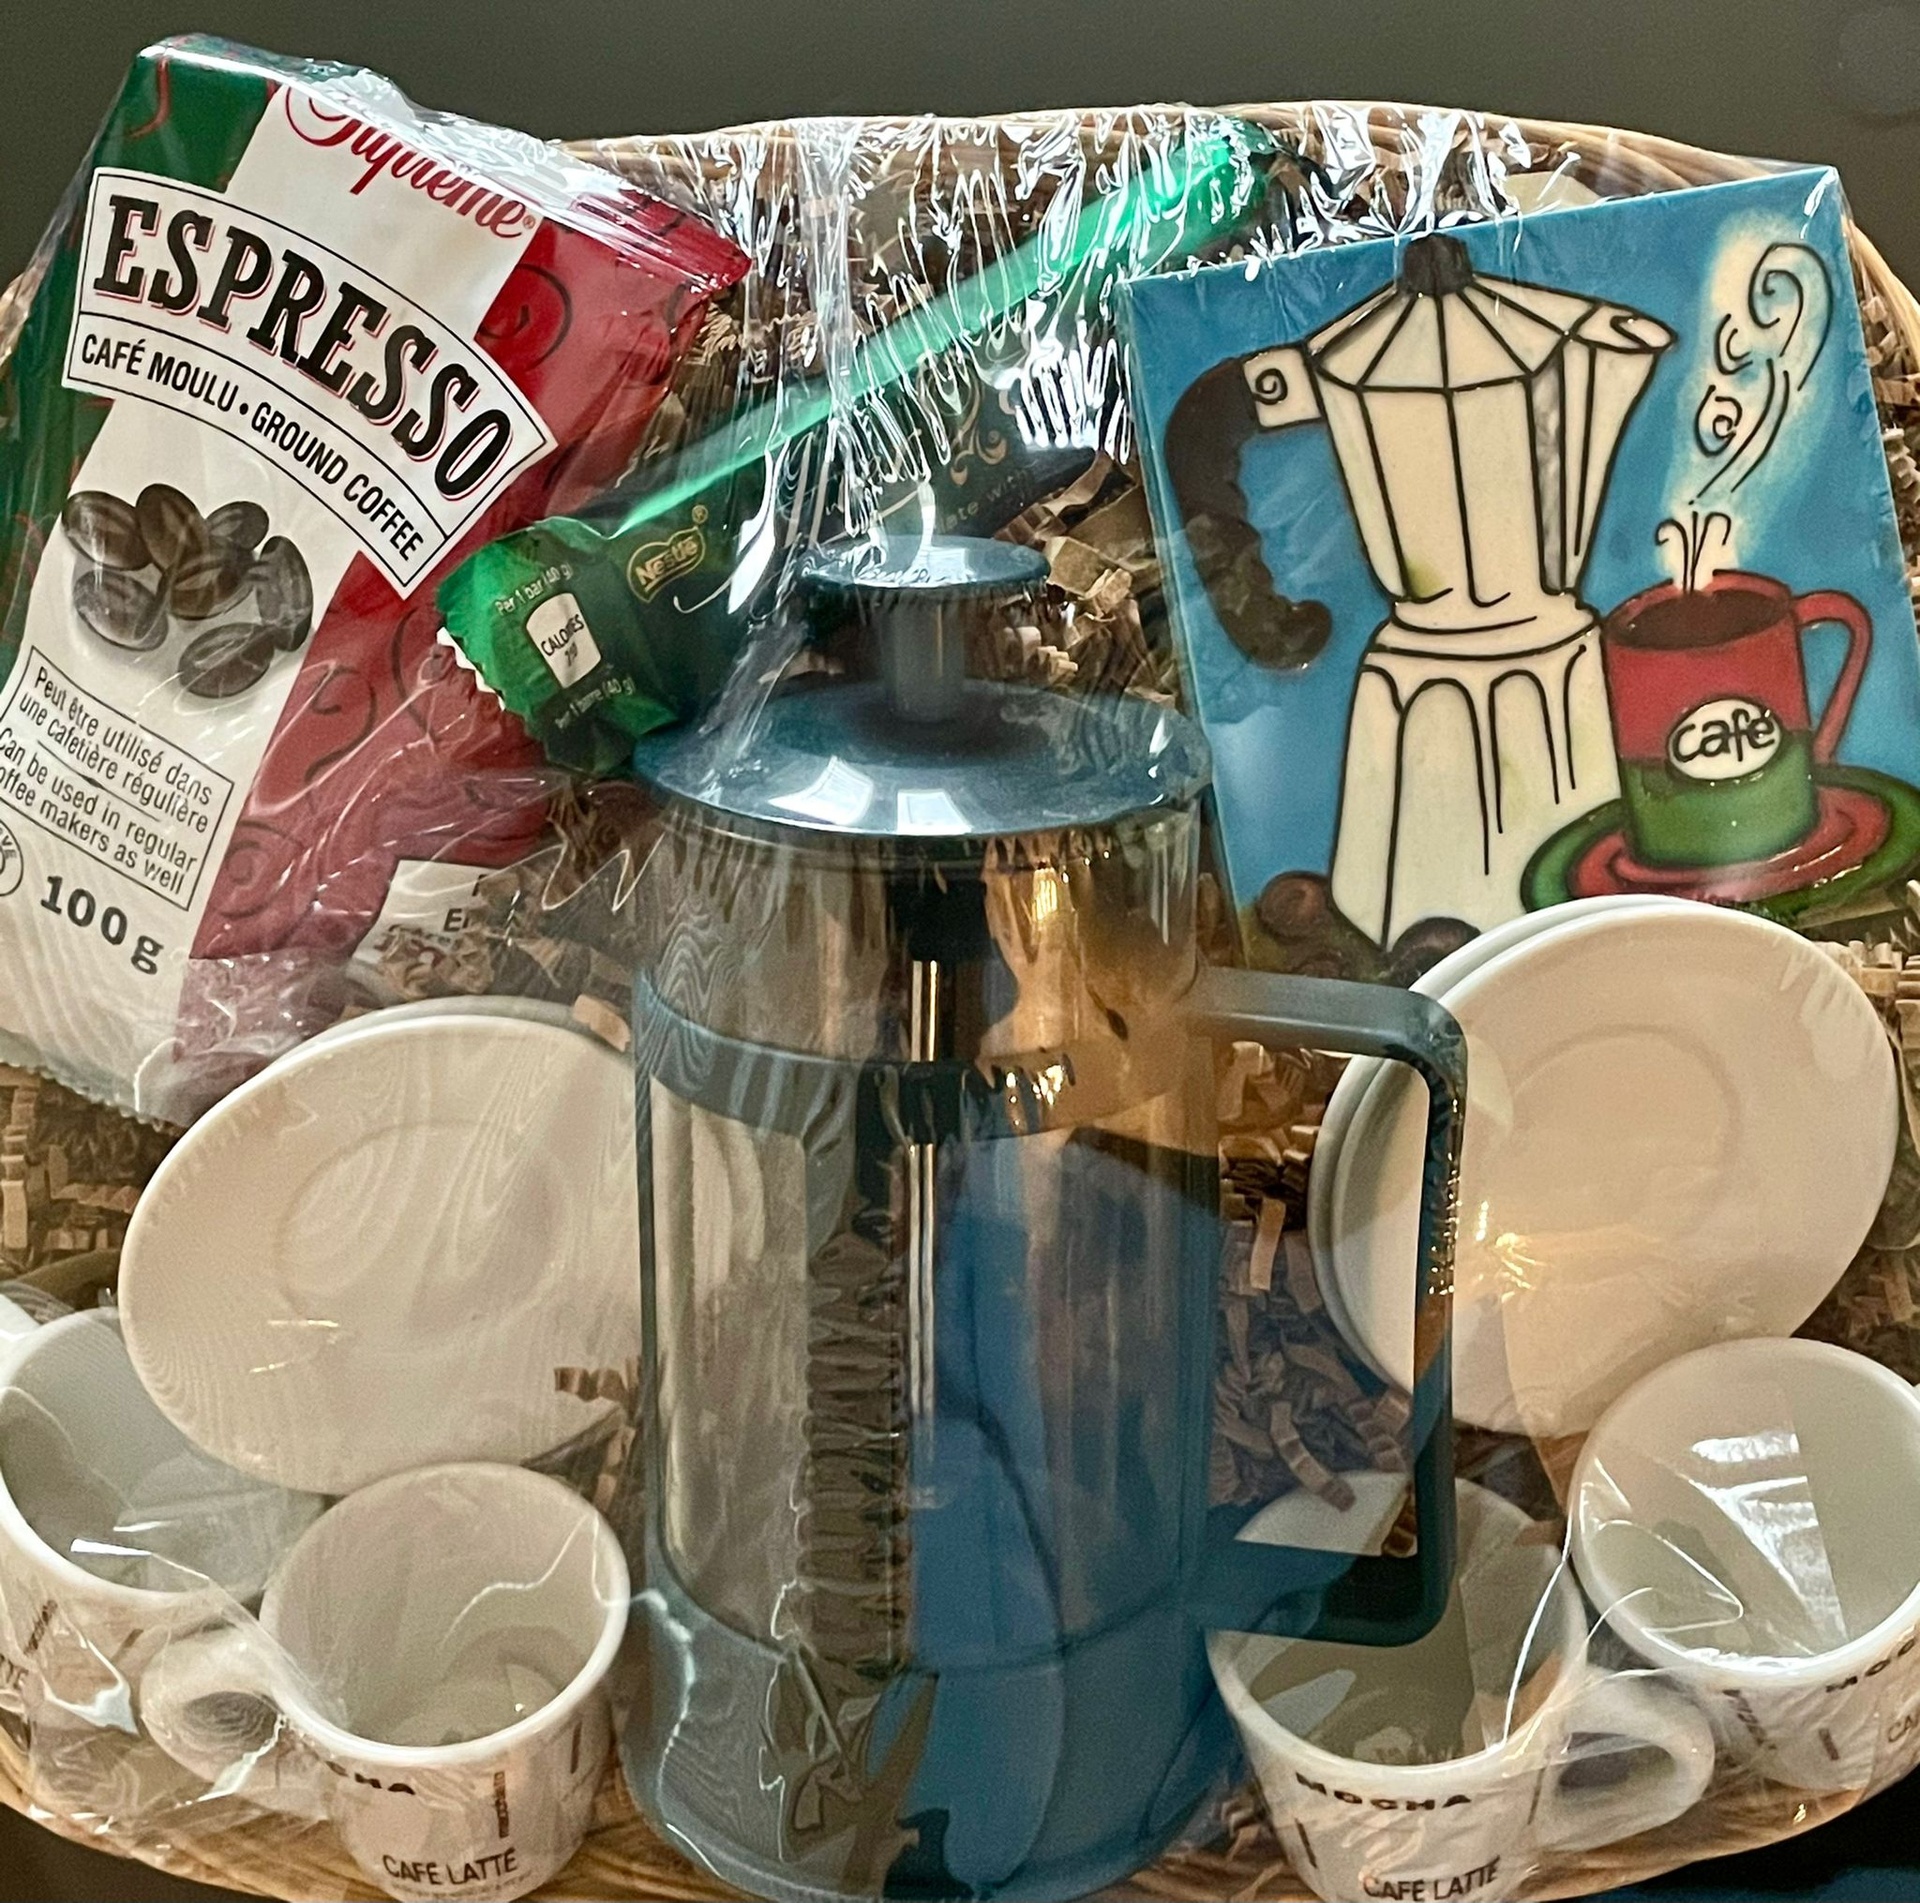 Auction For Espresso Coffee Basket